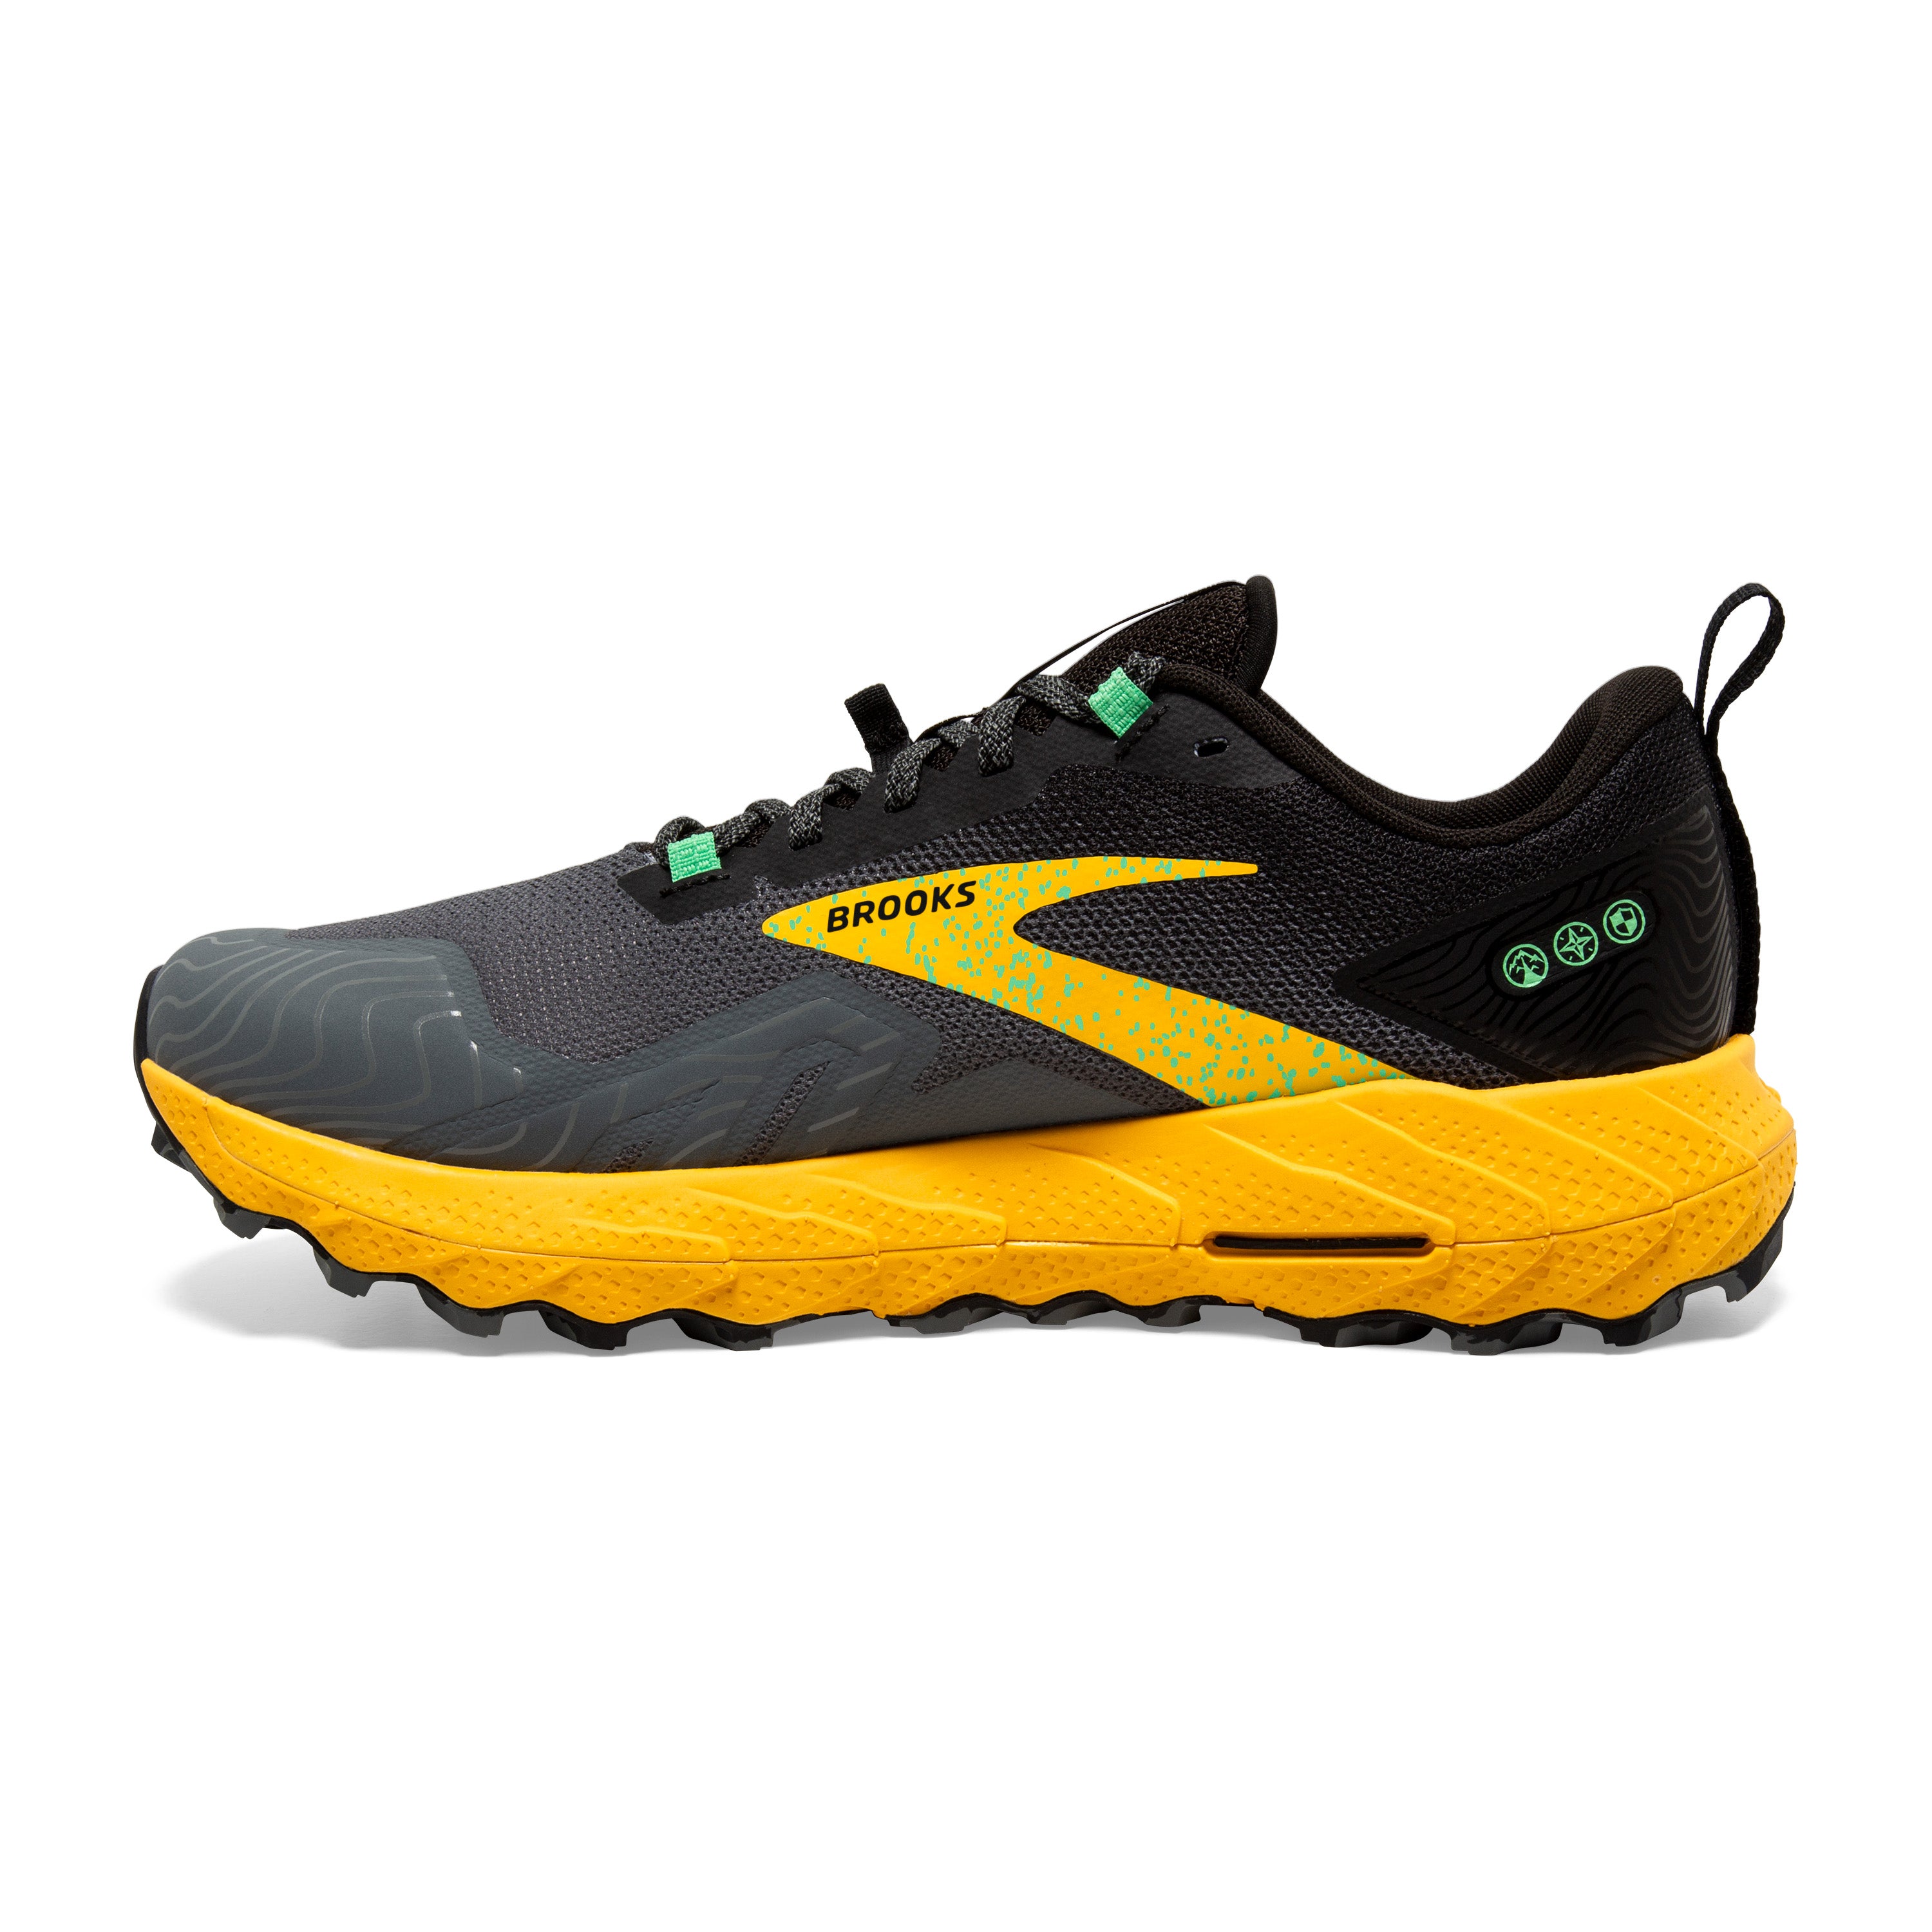 Cascadia 17 Men's Trail Running Shoes